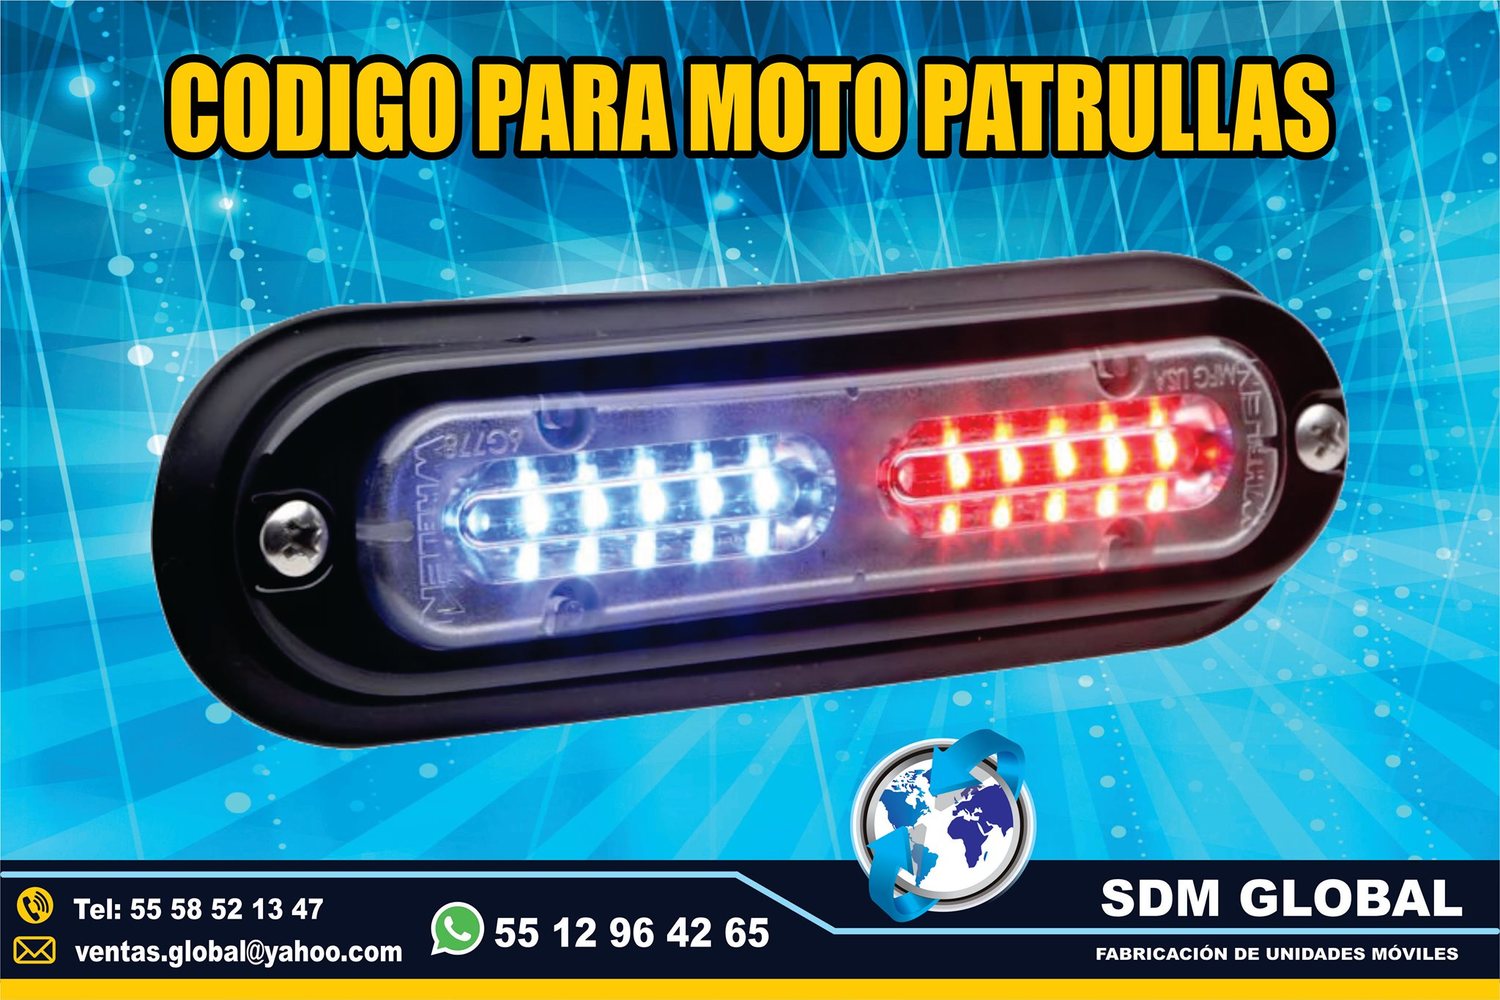 <span style="font-weight: bold;">Venta de Codigos Estrobos y Luces para patrullas rojo azul</span><br>